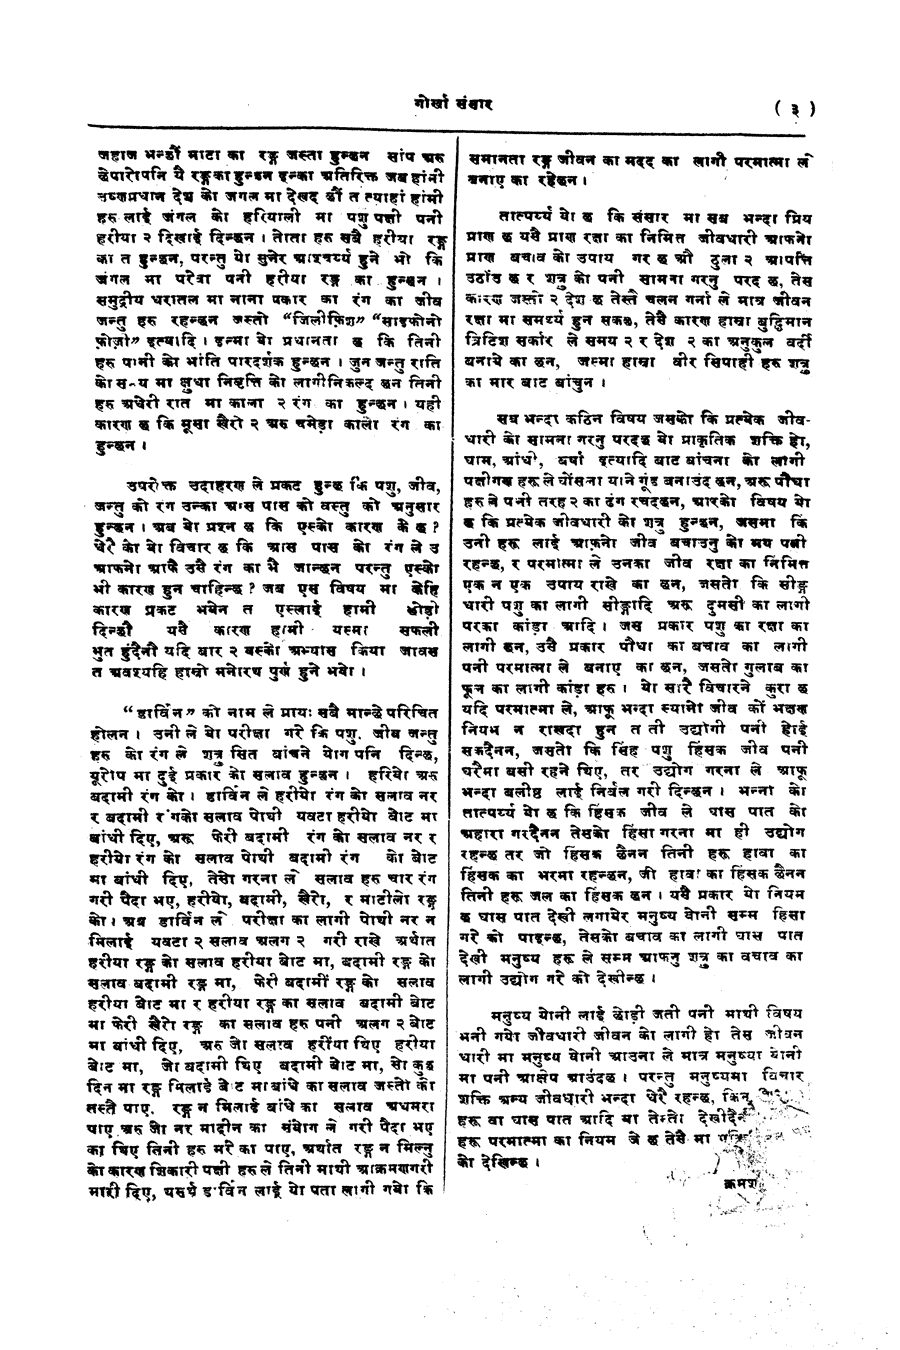 Gorkha Sansar, 15 June 1928, page 3